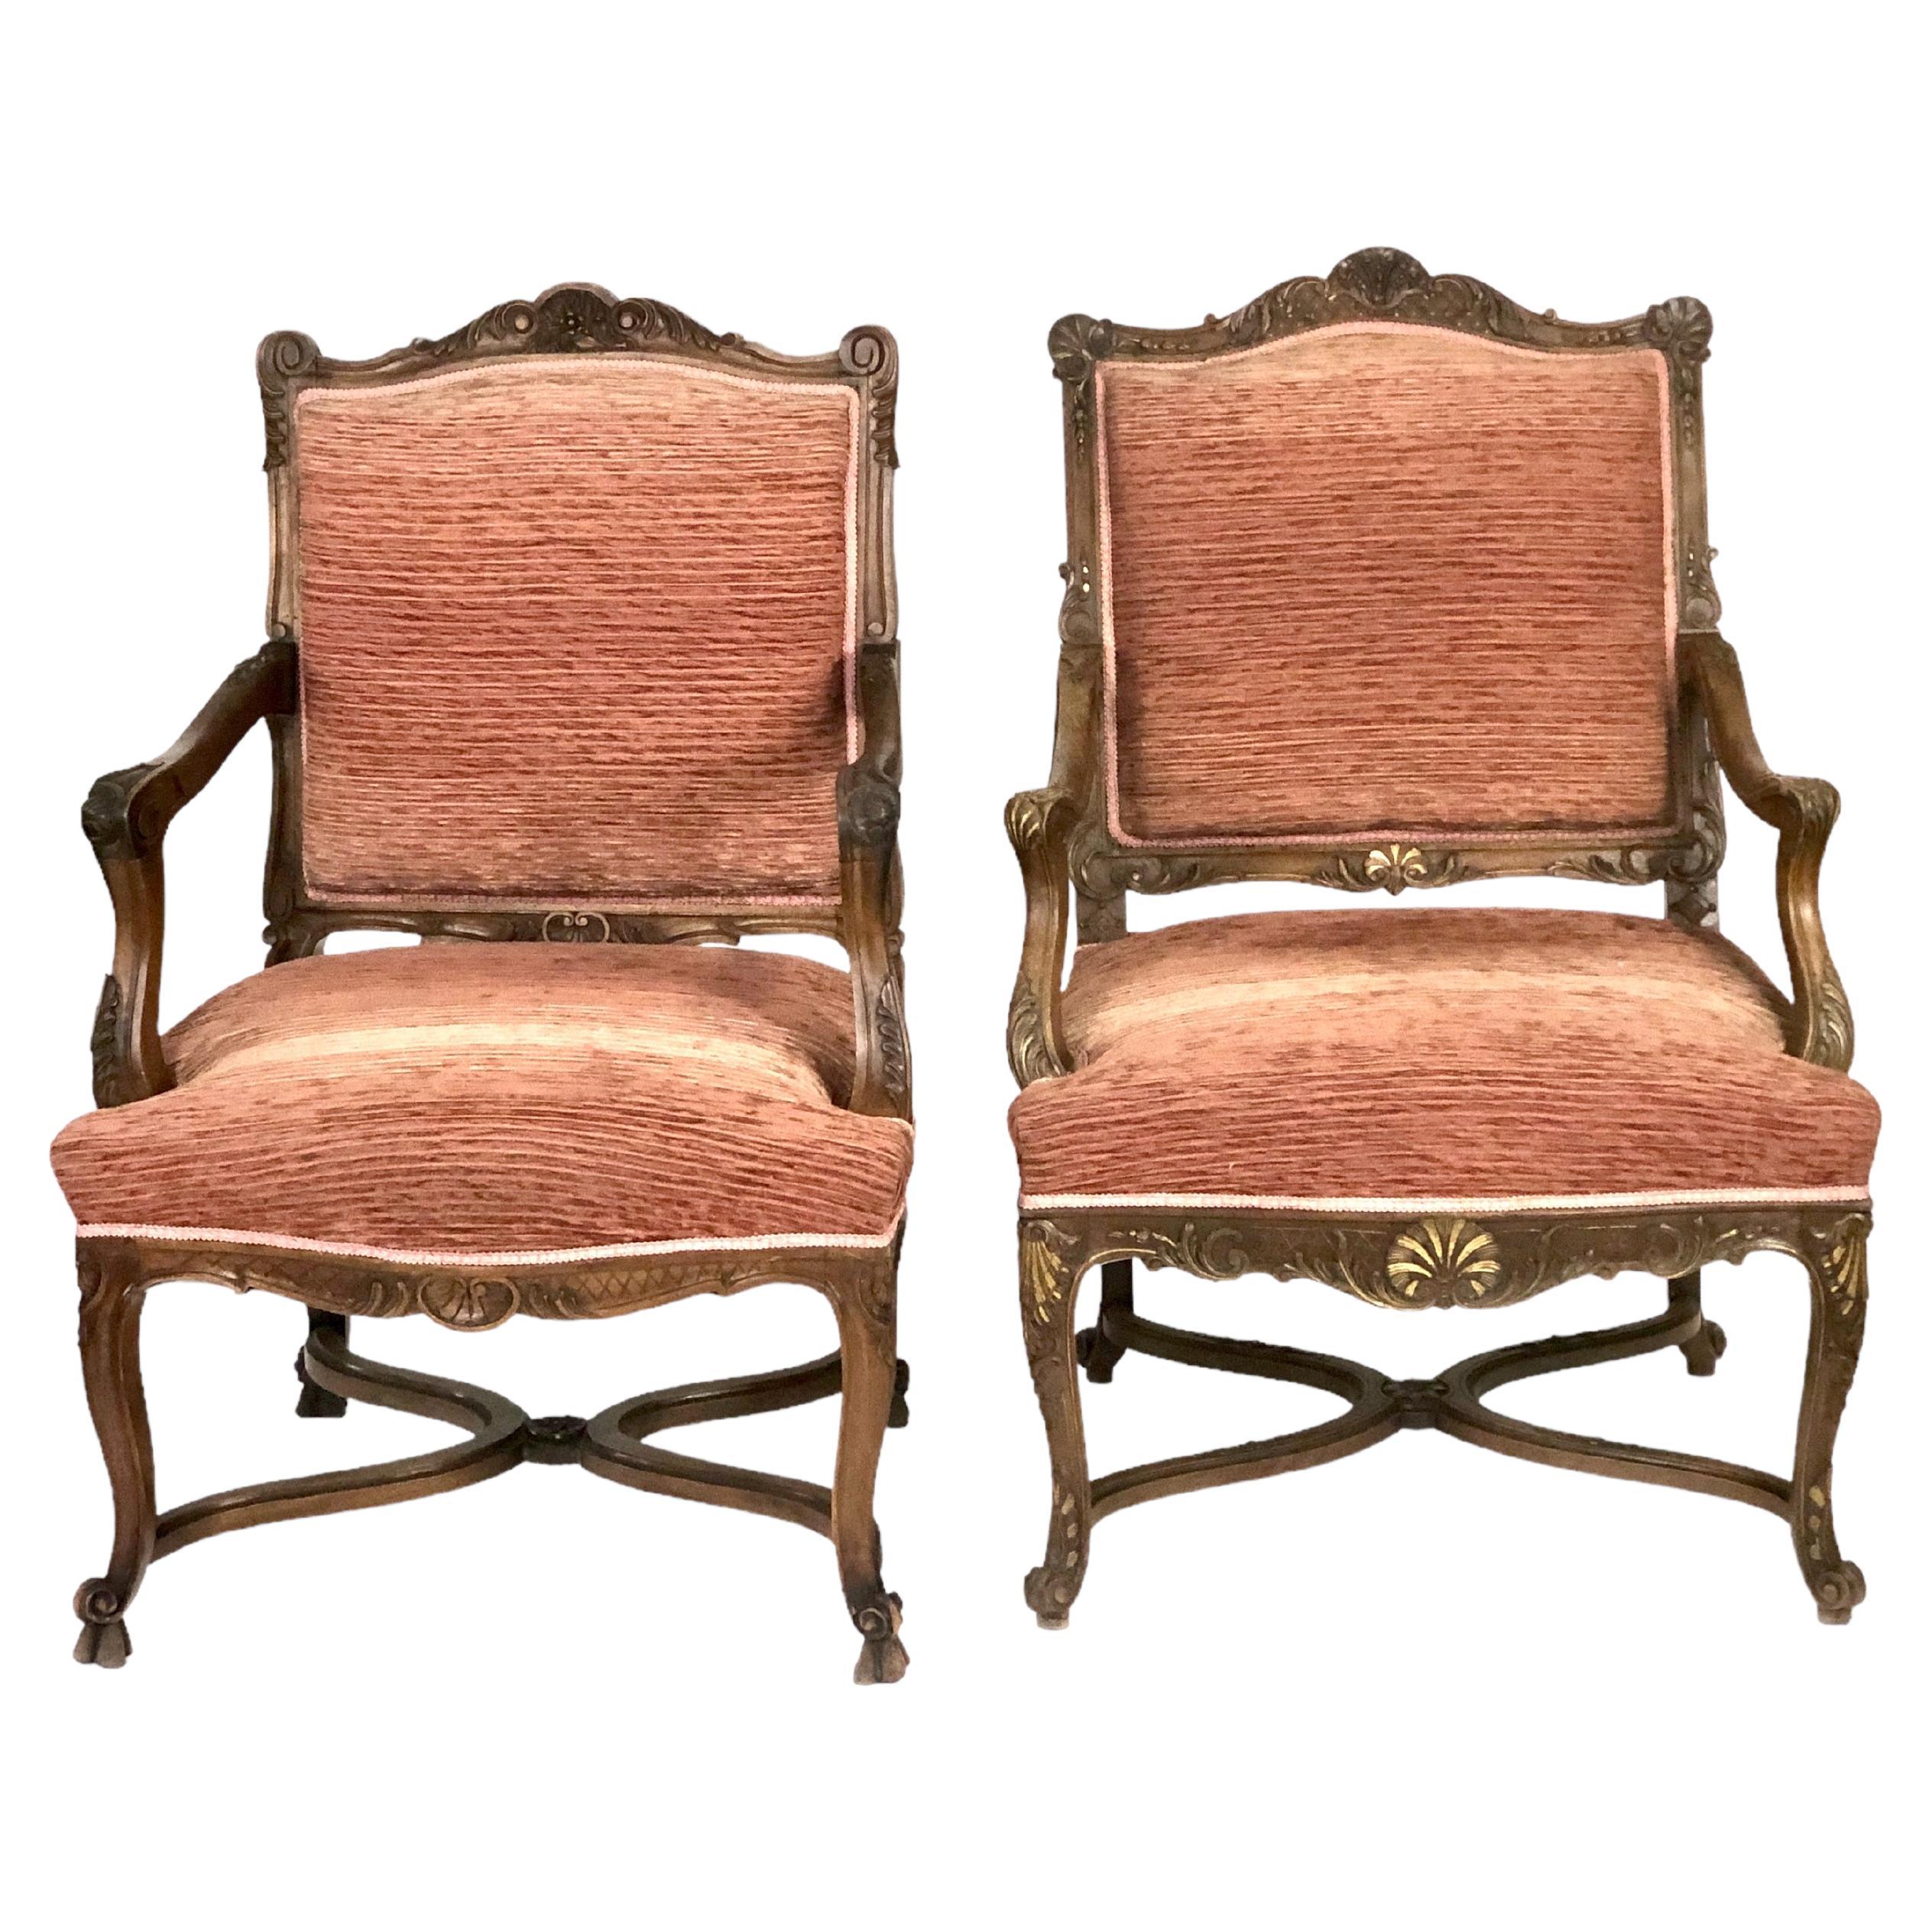 19th Century Pair of Walnut Regency Chairs Called “Fauteuils à La Reine” For Sale